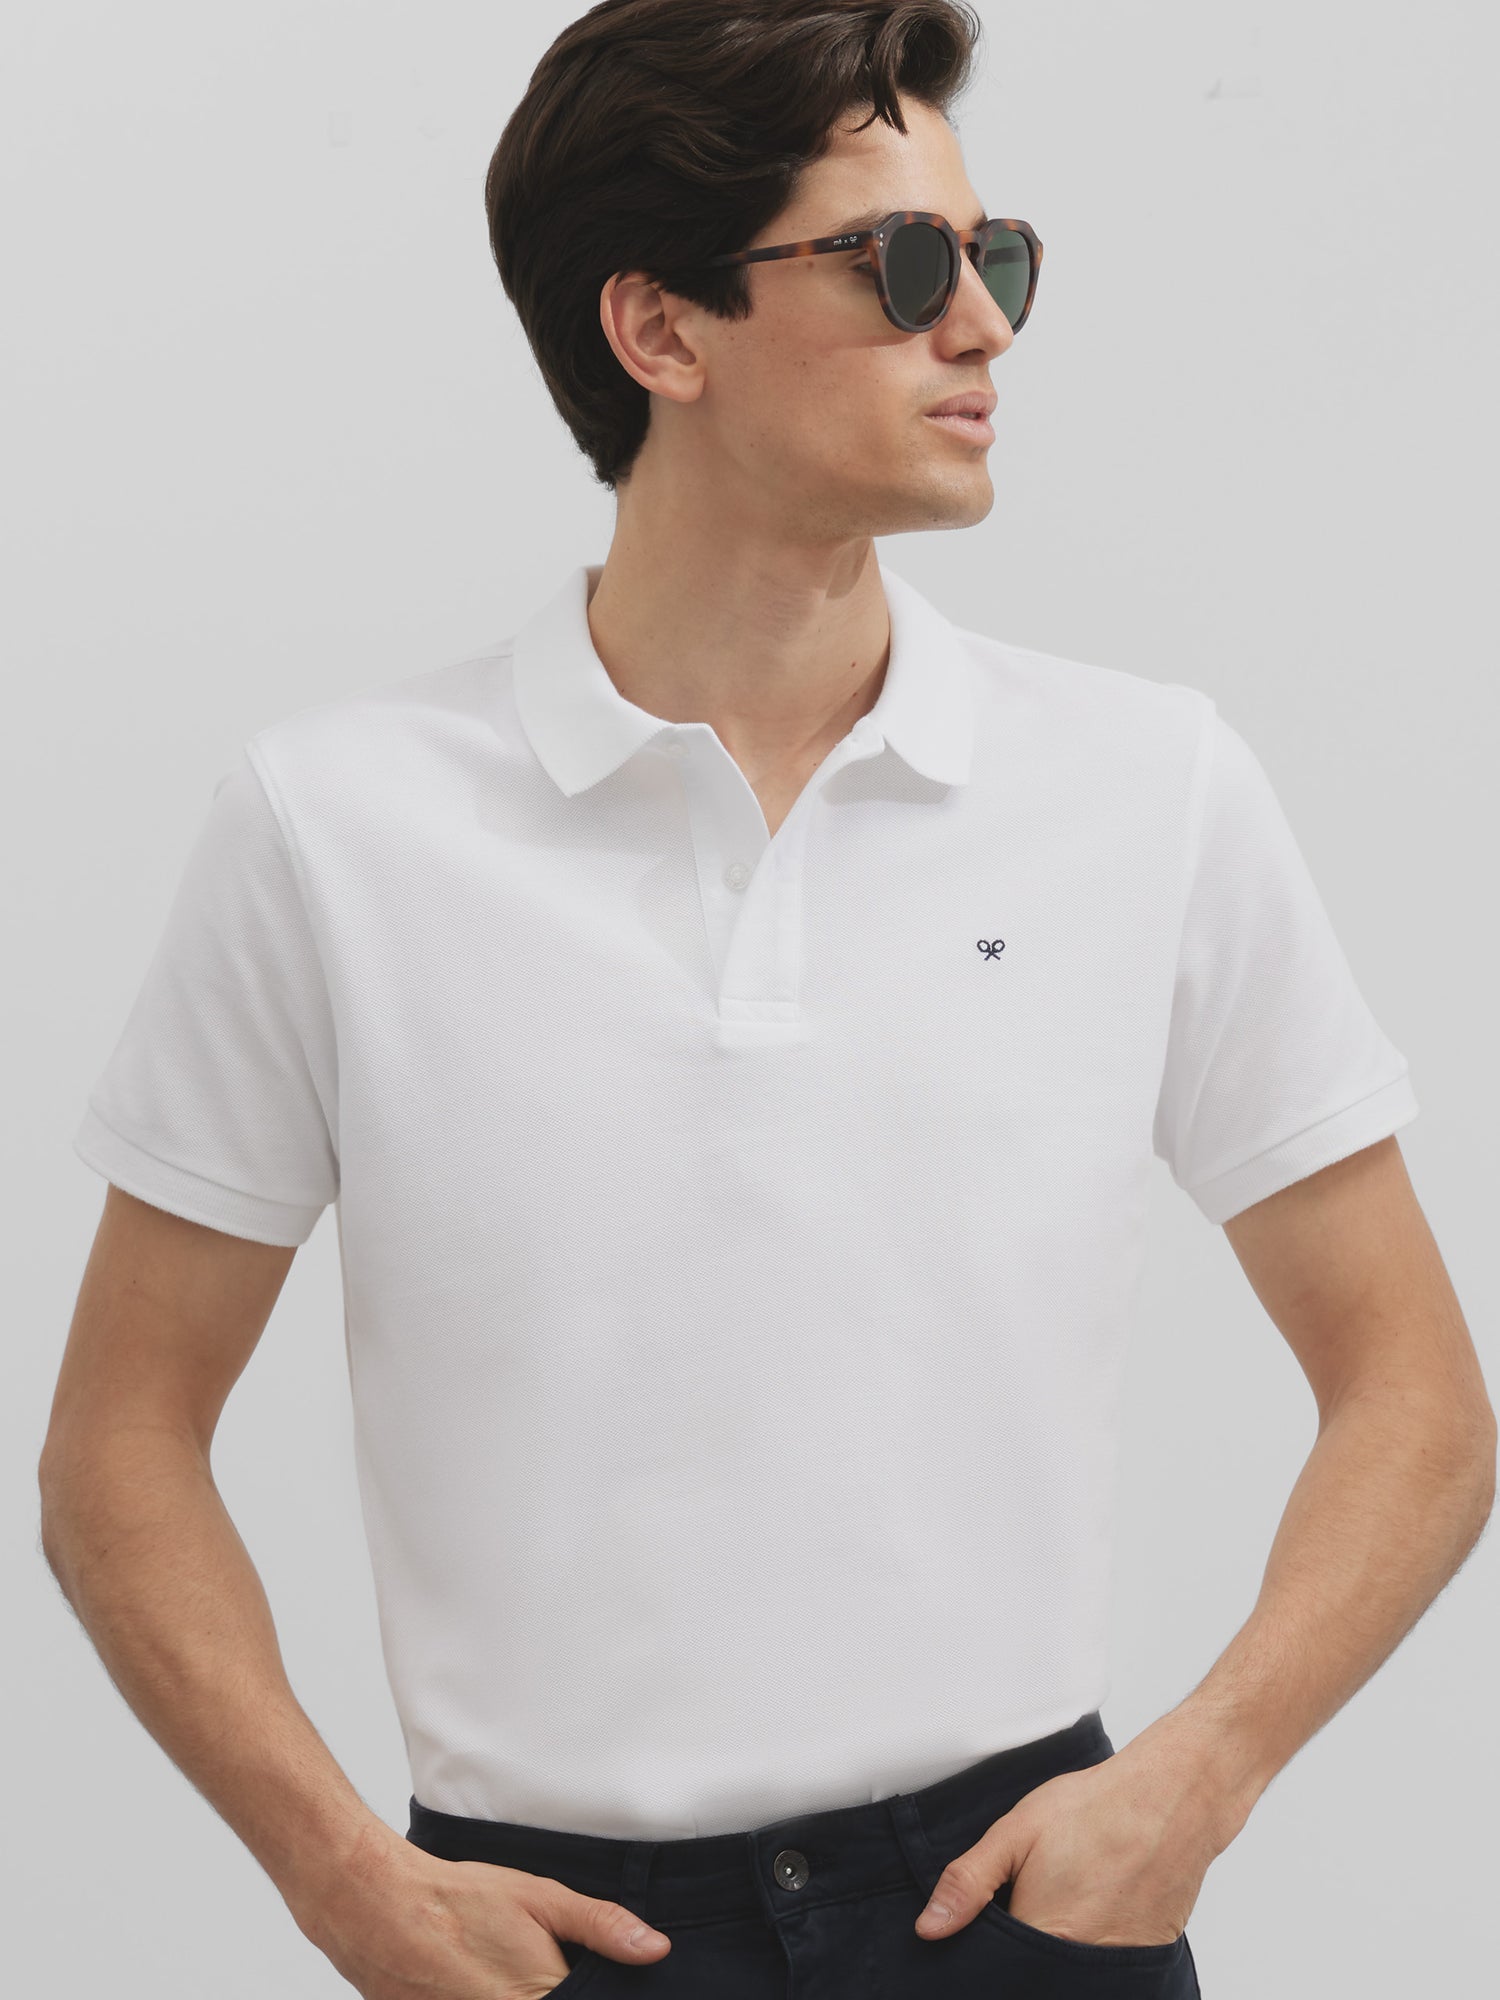 Classic plain white polo shirt